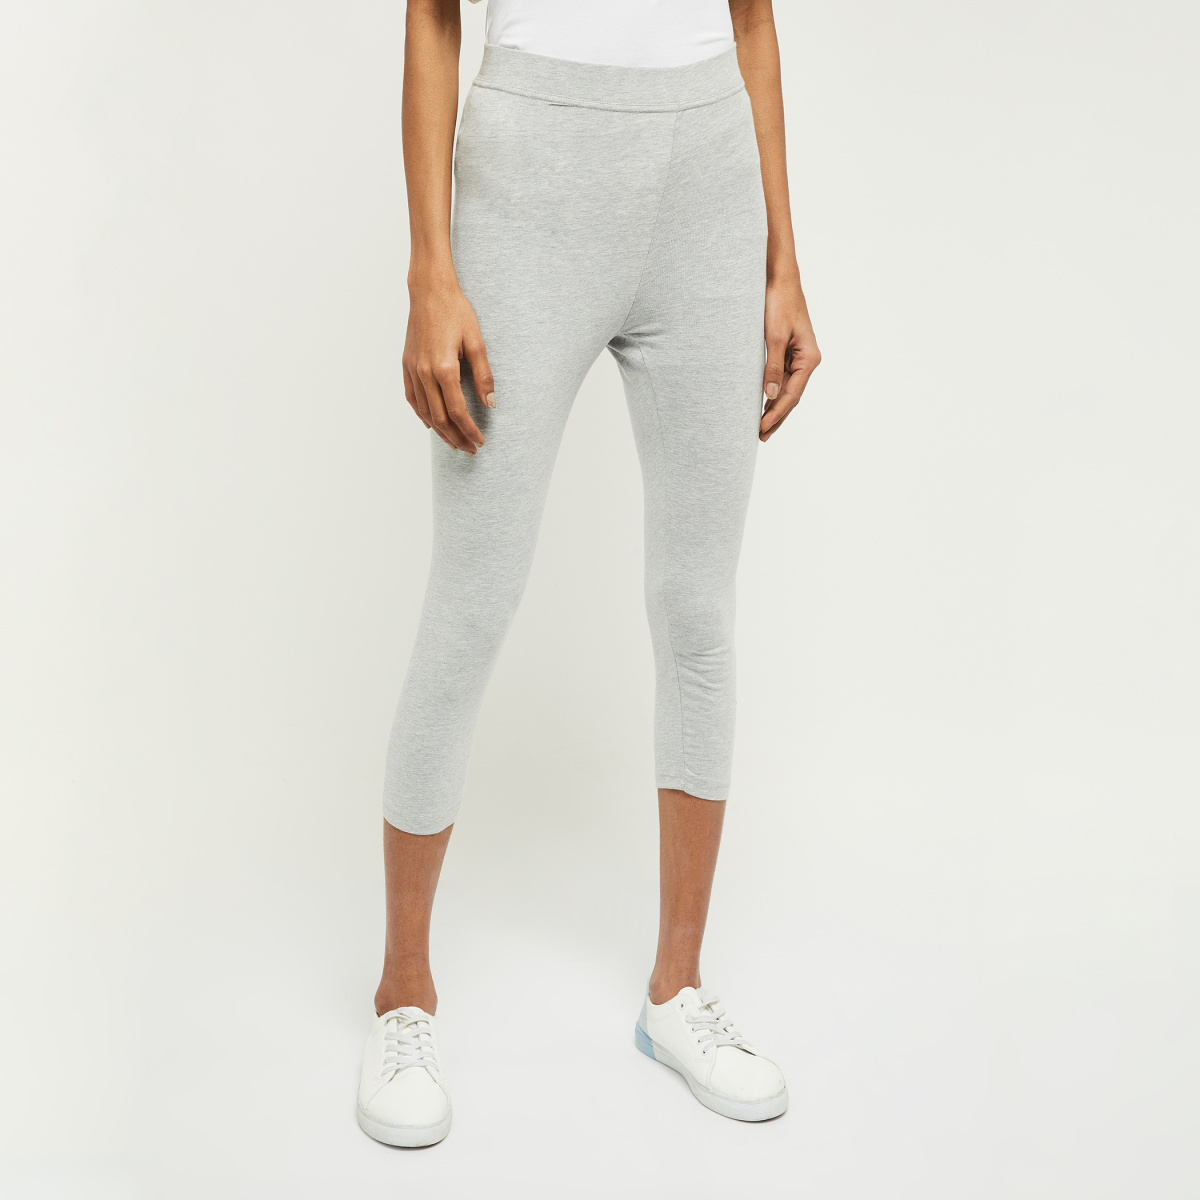 Buy Women's Plus Size Lace Trim Capri Leggings Stretch Crop Leggings Summer  Tights Pants, White, 3X at Amazon.in